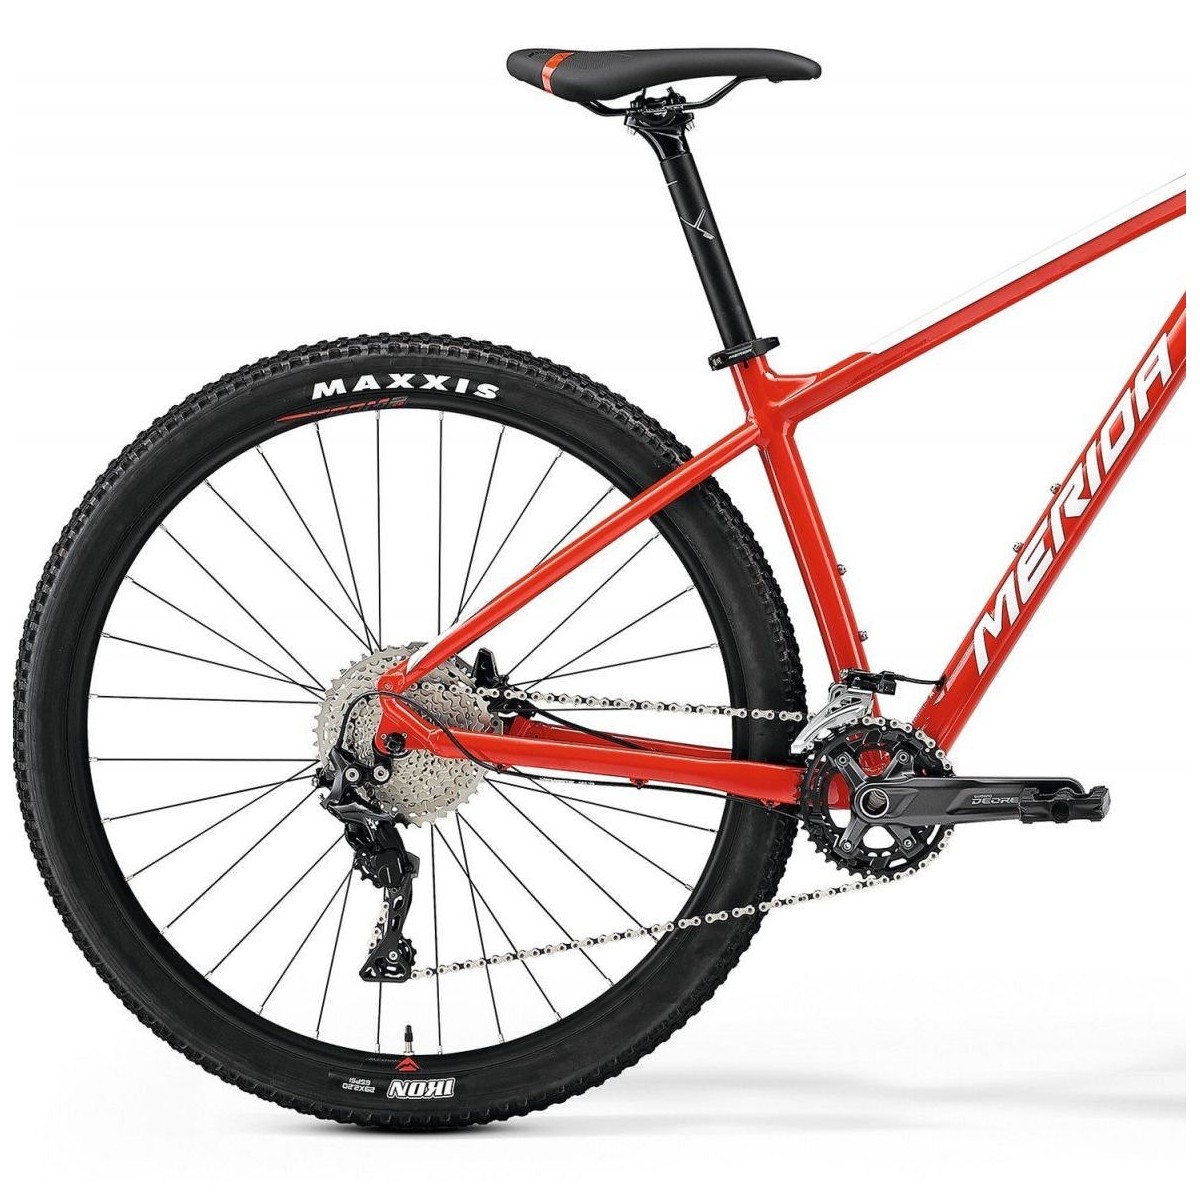 MERIDA BIG NINE 500 bicycle - red